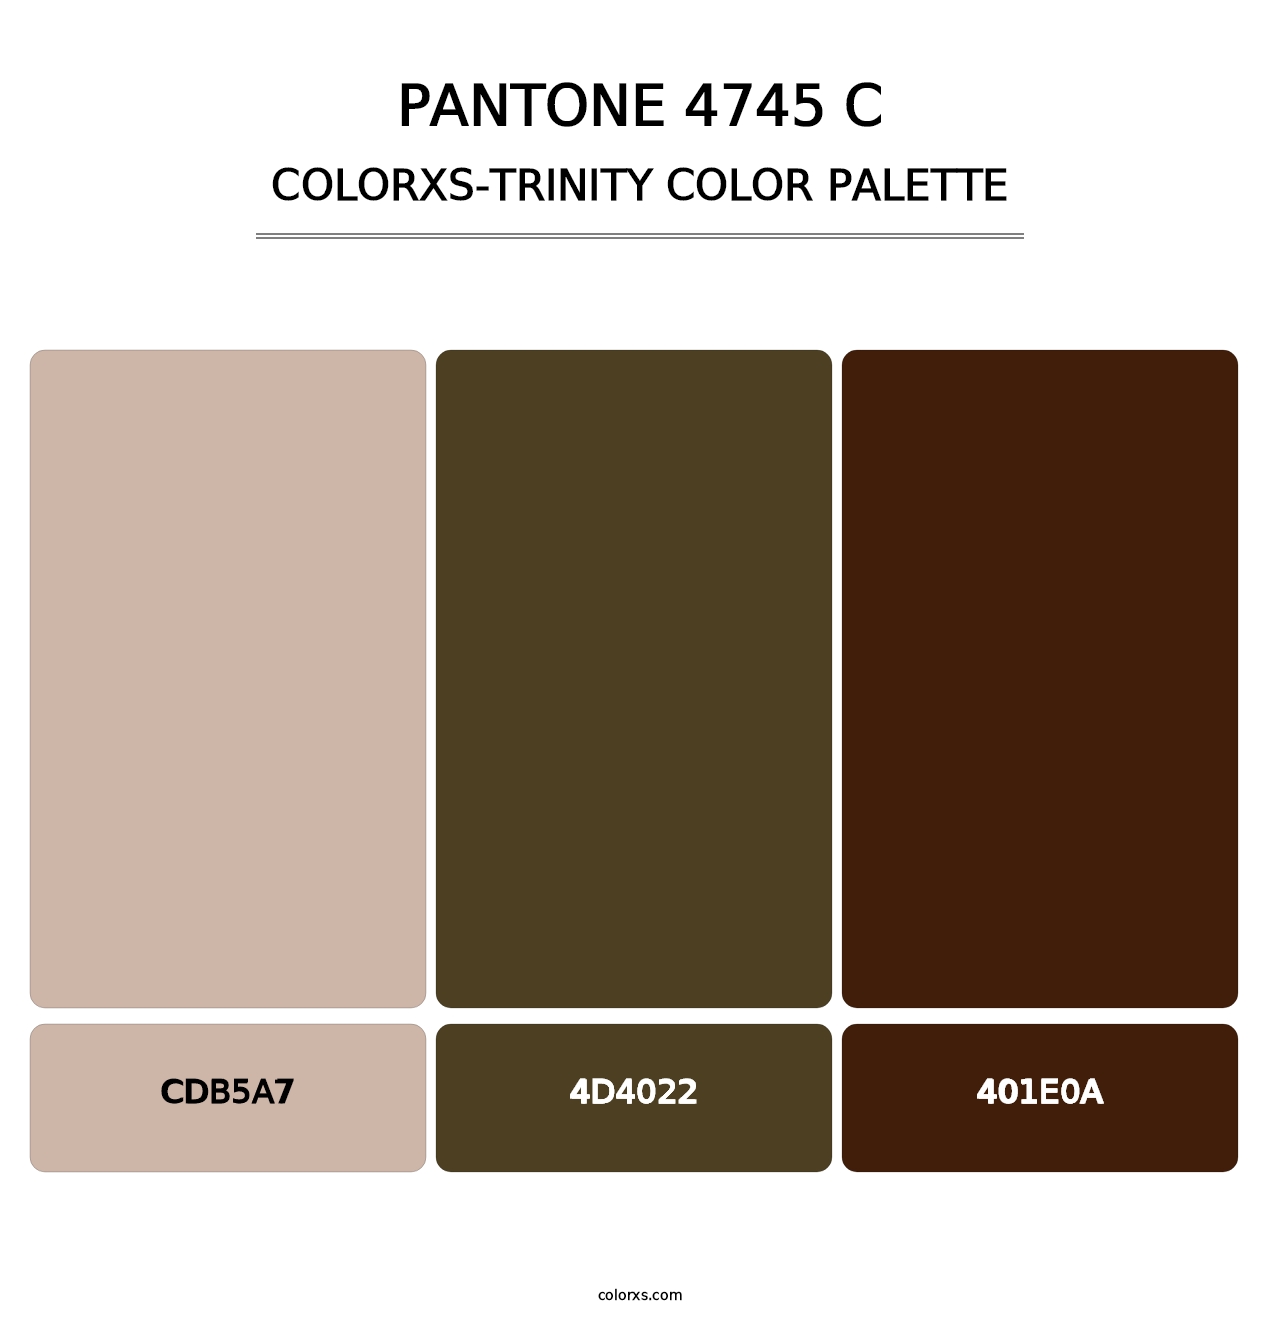 PANTONE 4745 C - Colorxs Trinity Palette